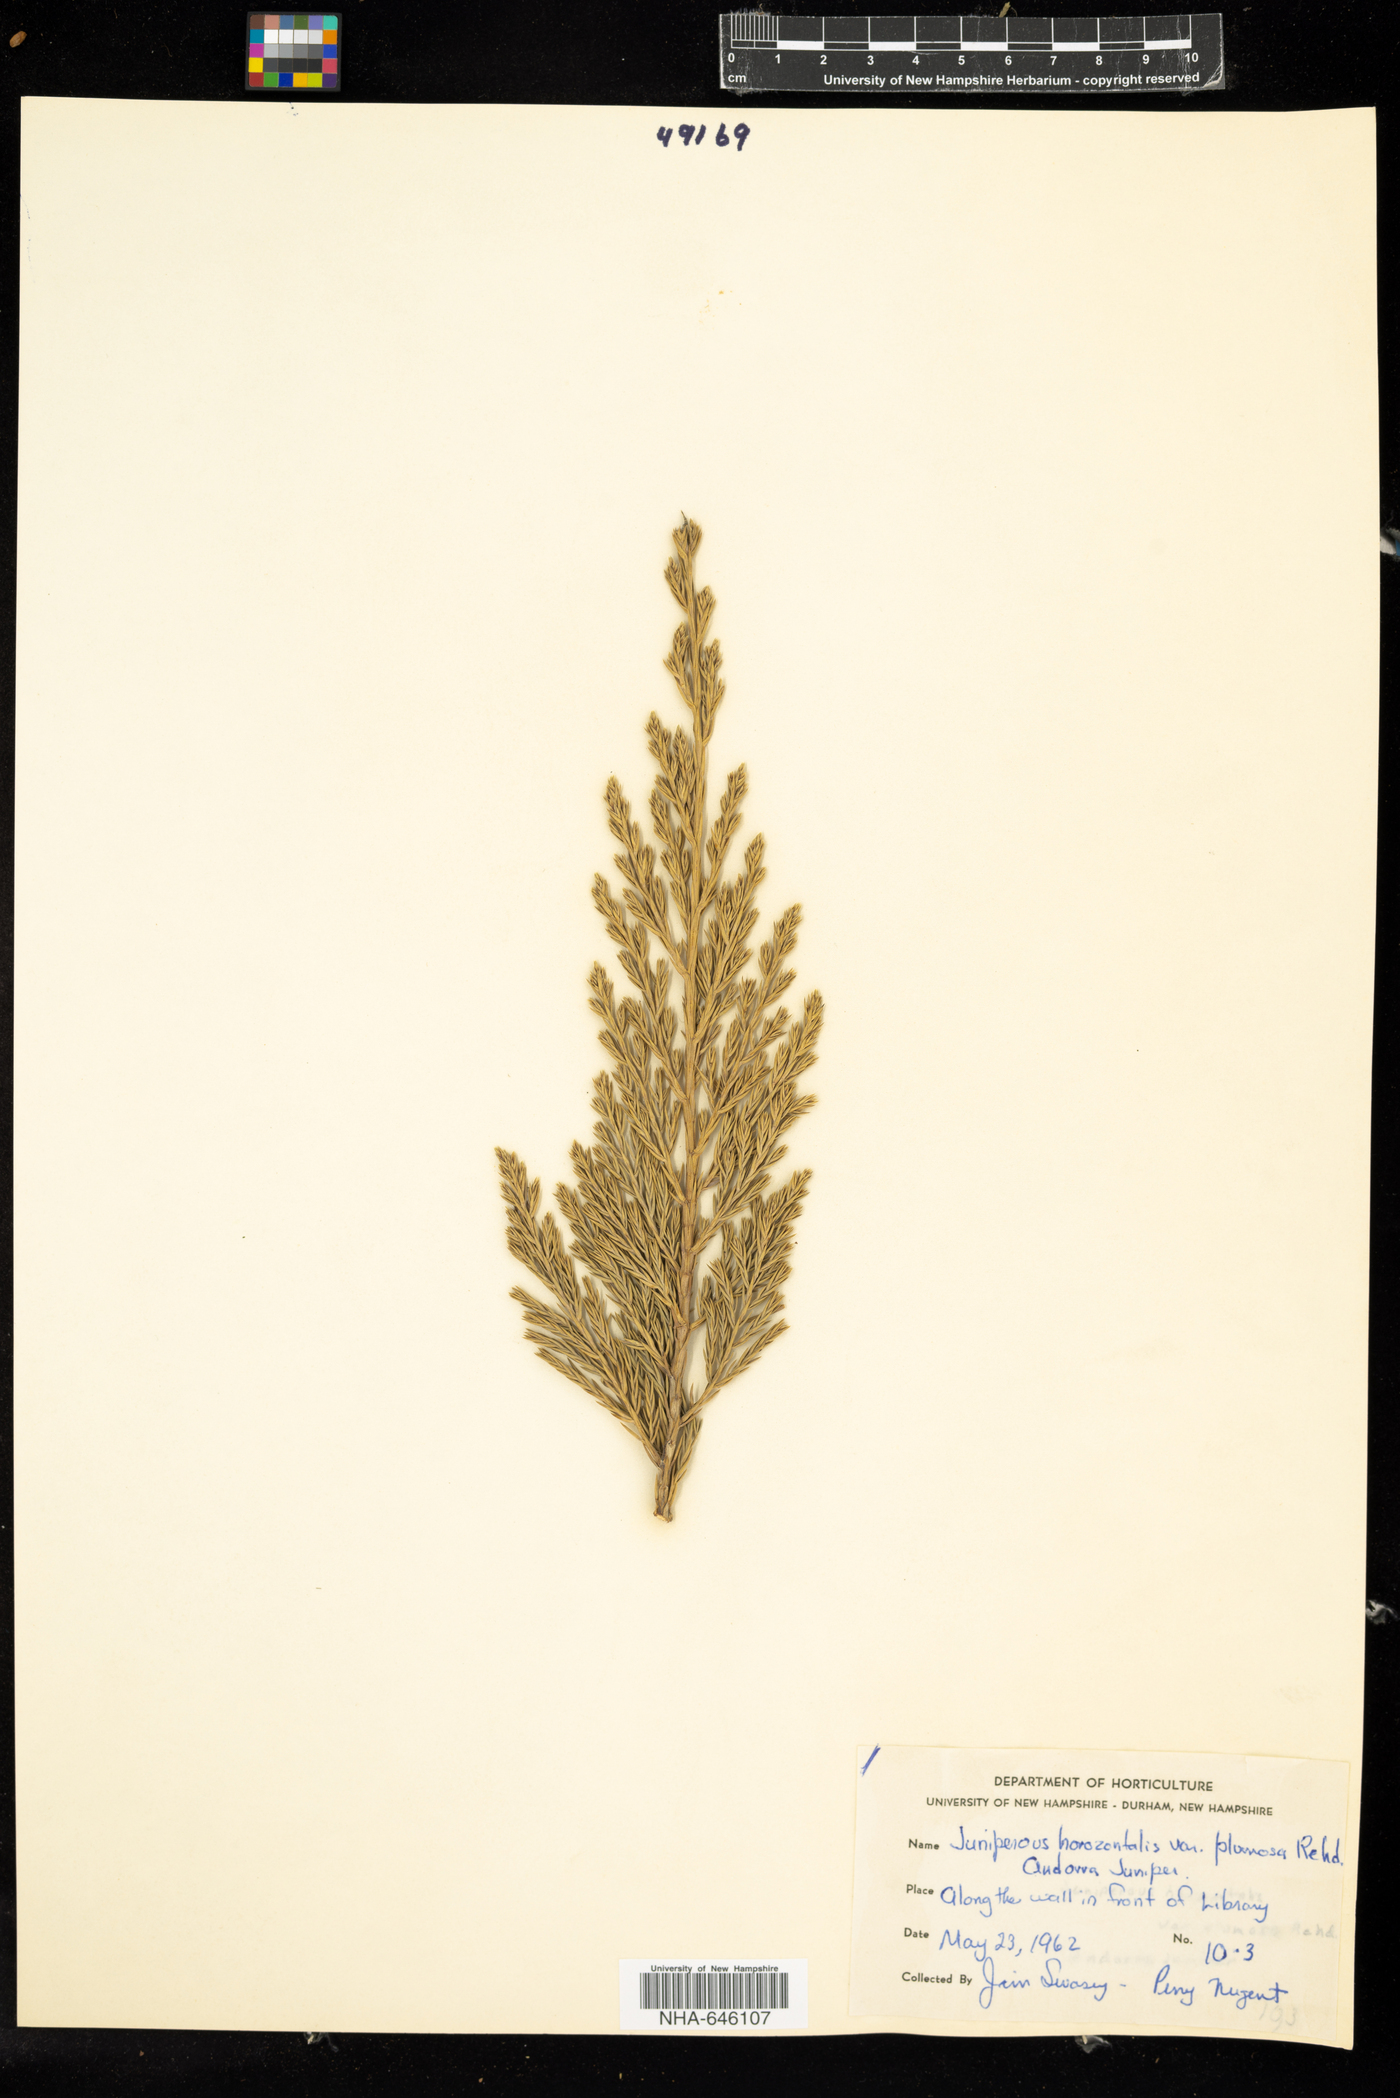 Juniperus horizontalis var. plumosa image